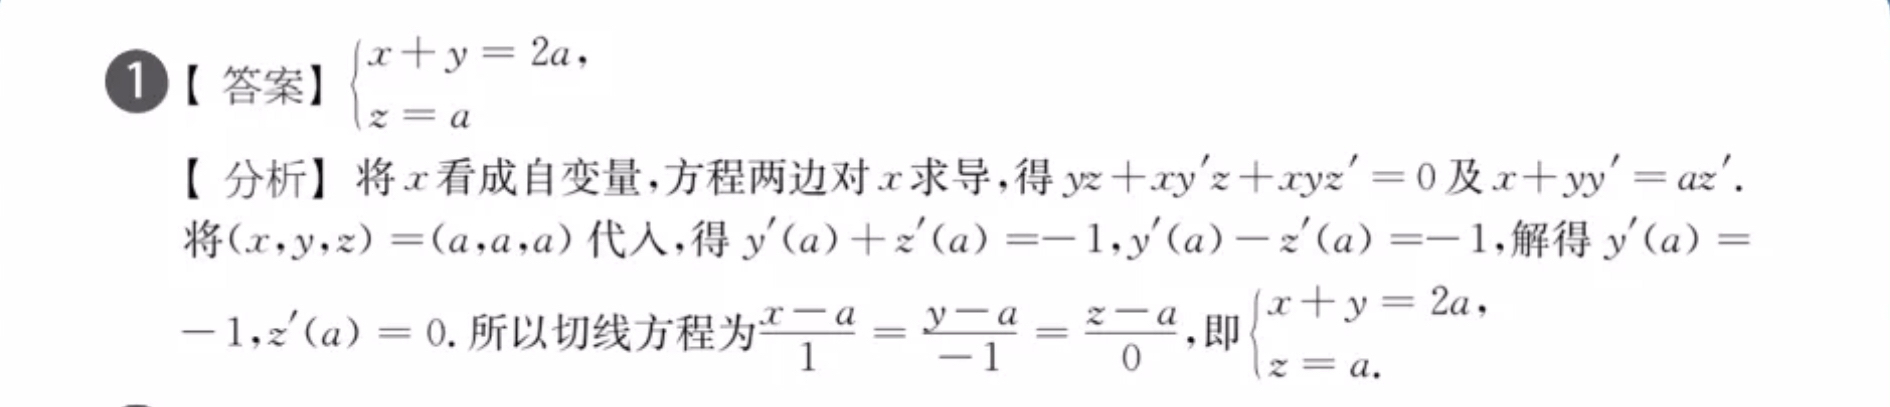 '></div><hr><h3>老师回复问题</h3>它将x看作自变量，所以x＝x(左边表示函数名，右边表示函数的表达式)，所以x